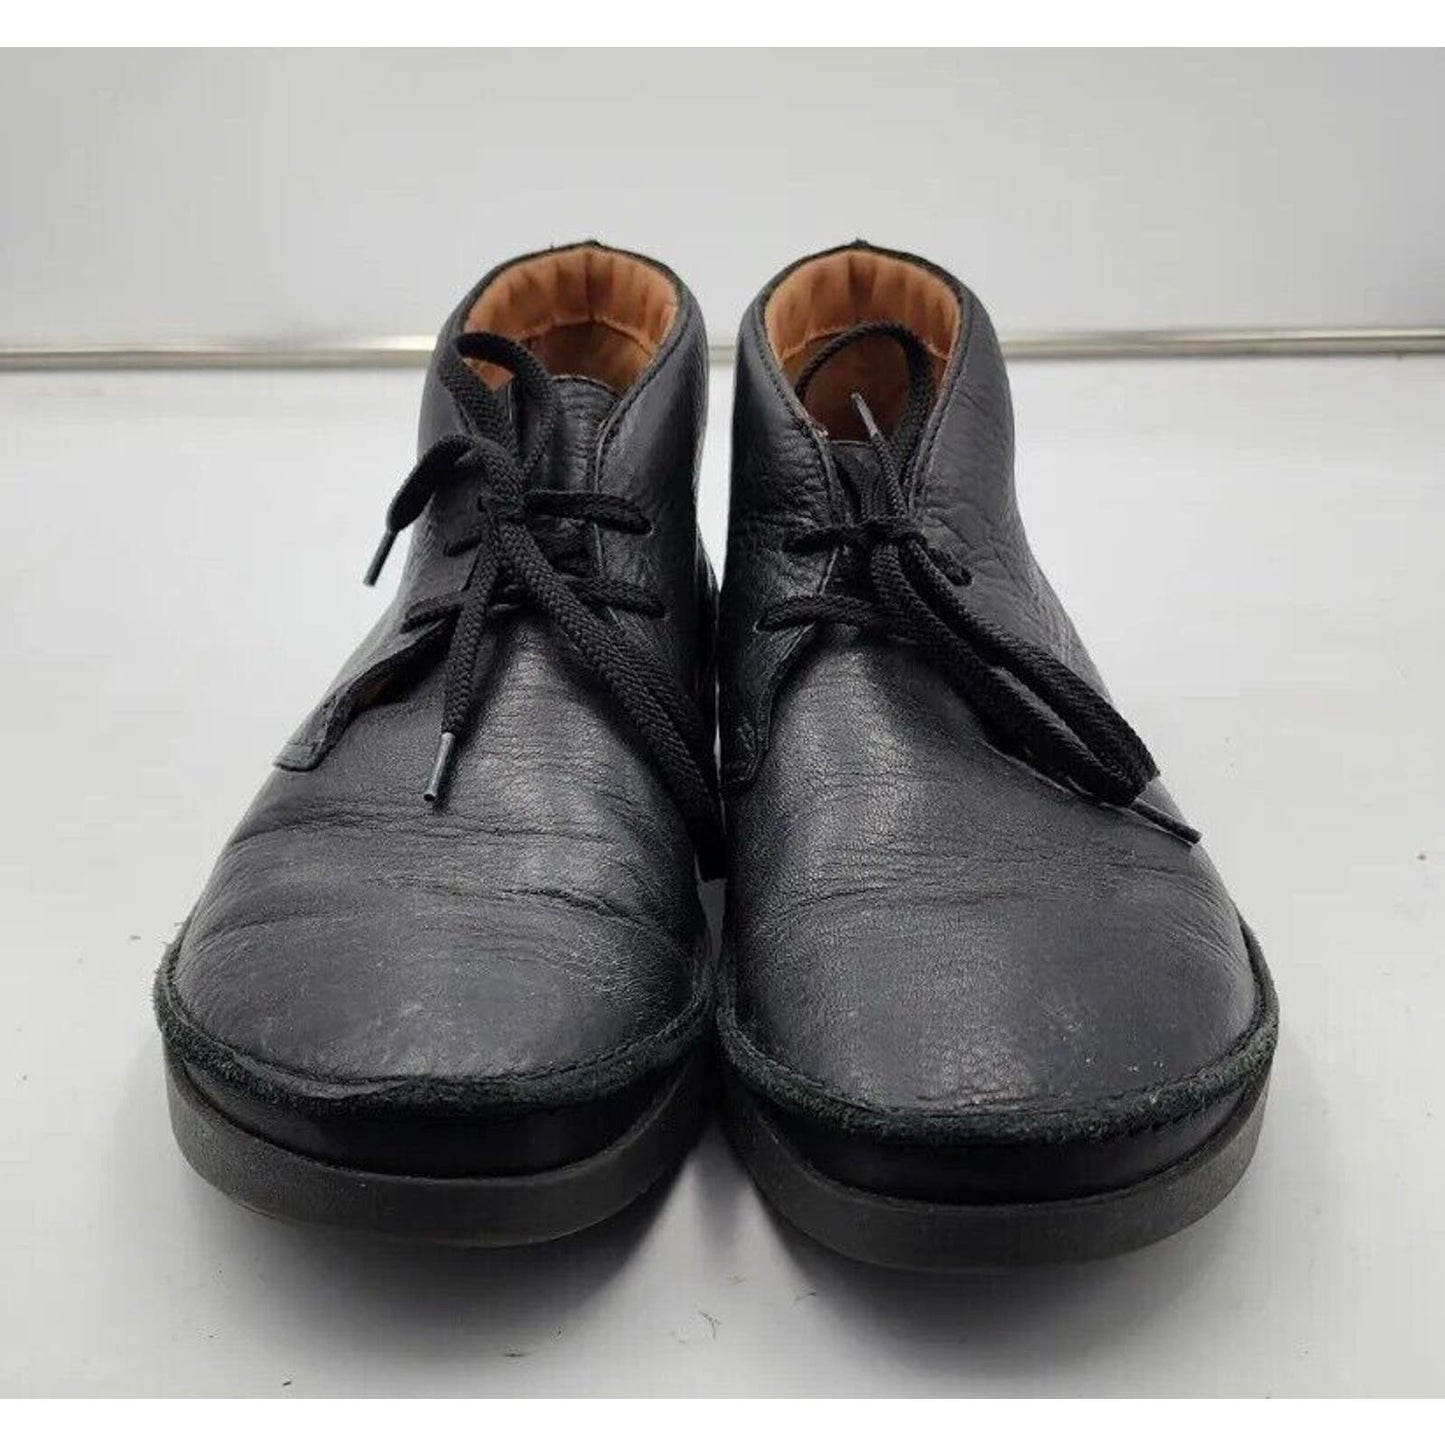 CLARKS ACTIVE AIR Black Soft Leather Chukka Boots Shoes Men's Size 9.5 M US EUC